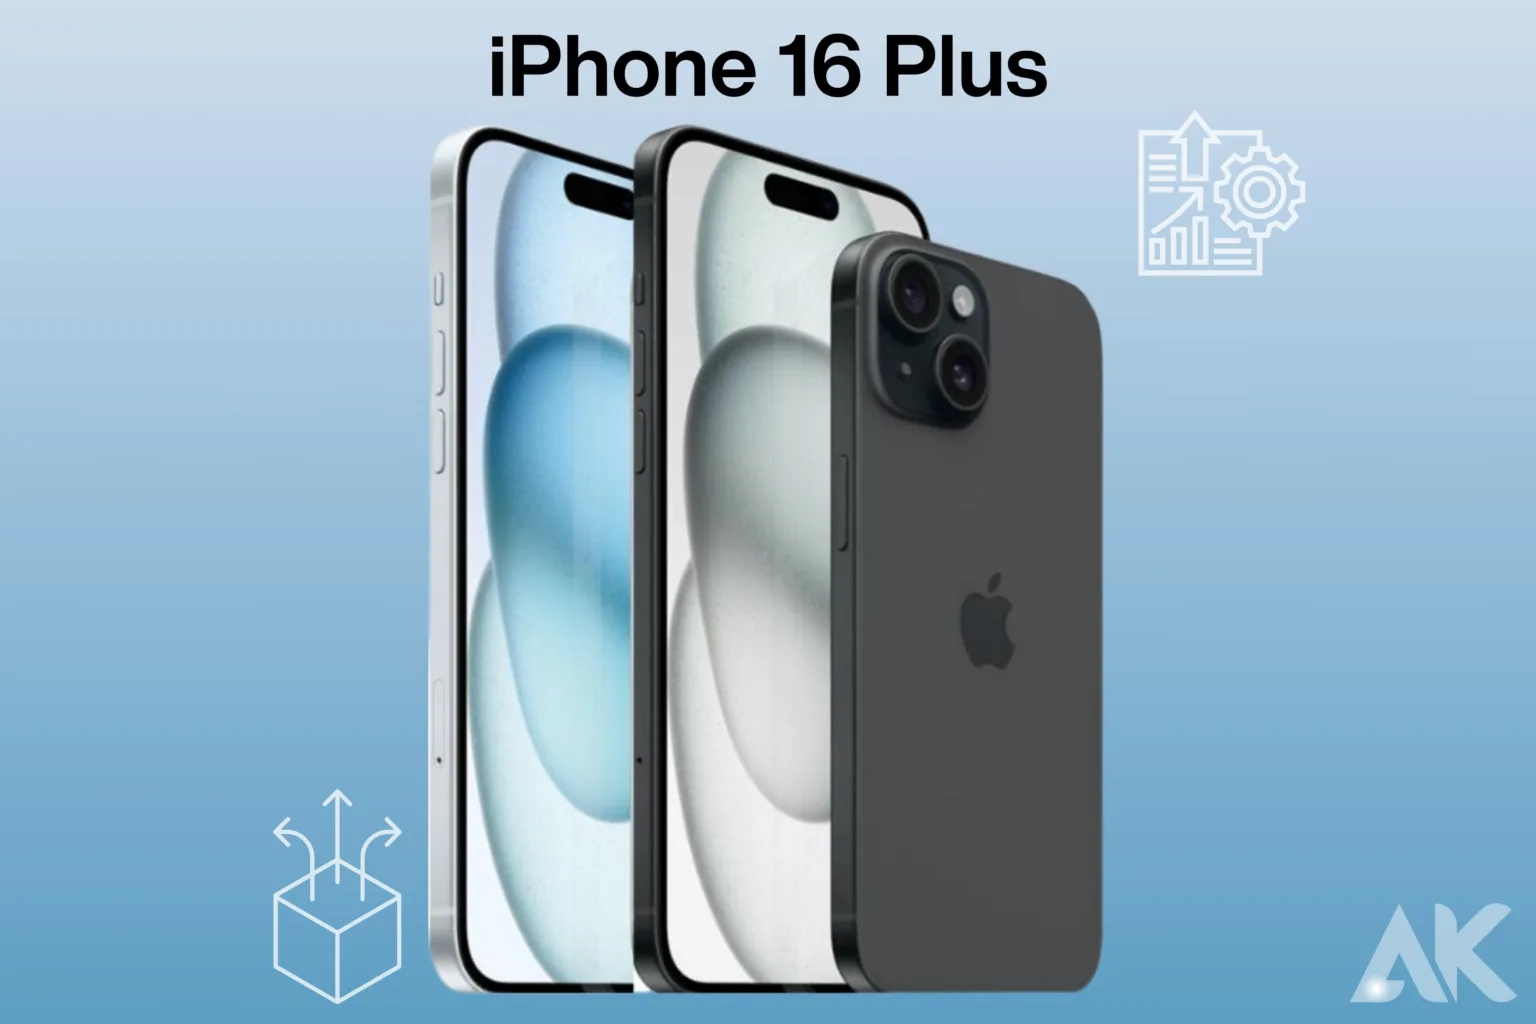 iPhone 16 Plus release date